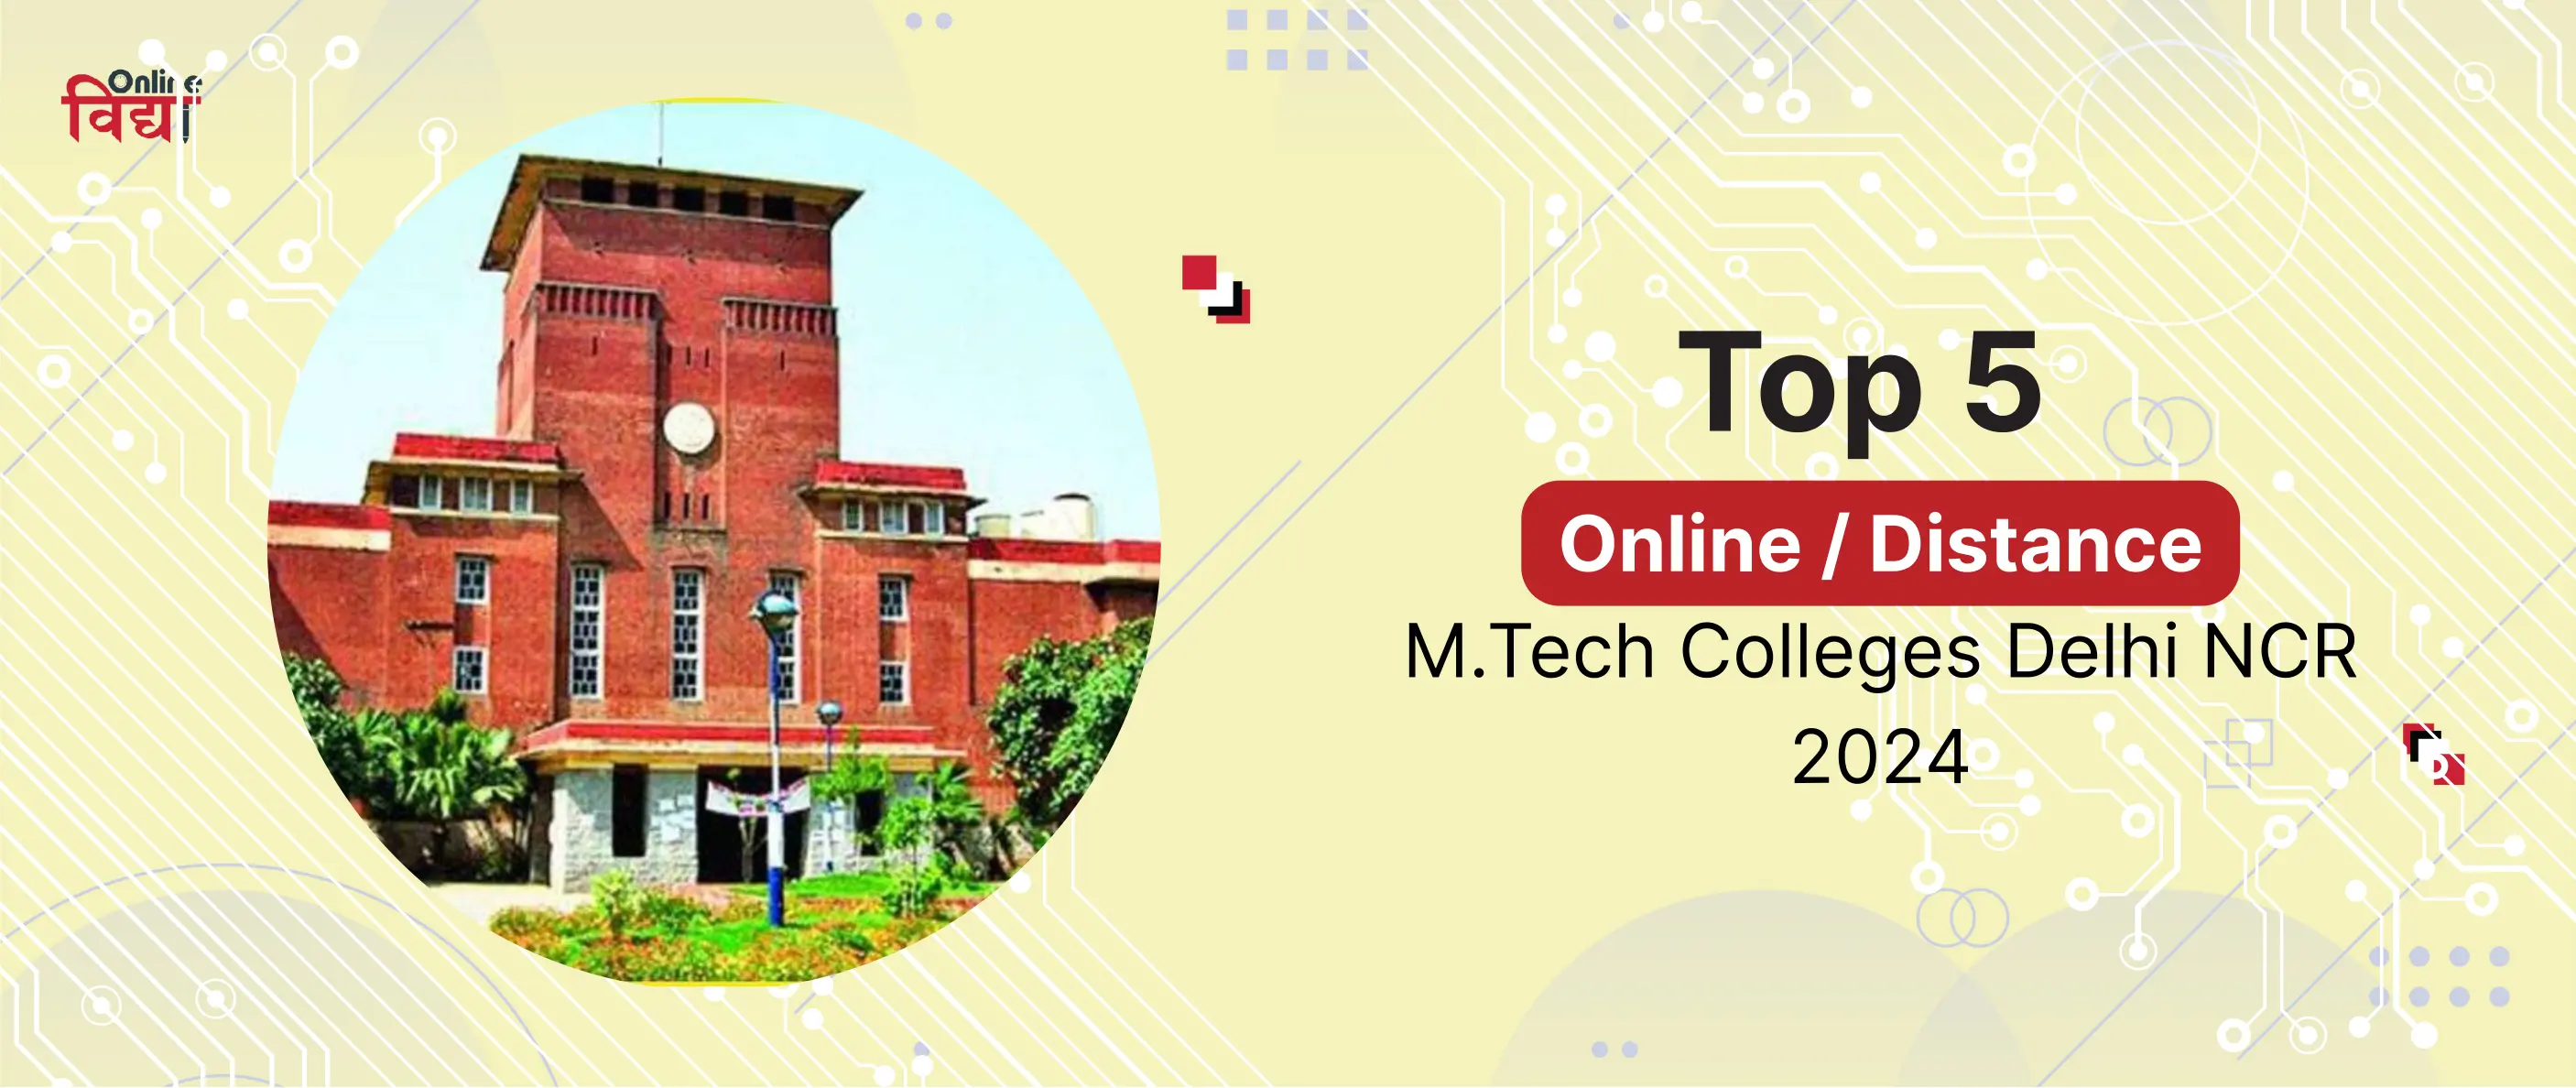 Top 5 Online/ Distance M.Tech Colleges in Delhi NCR 2024